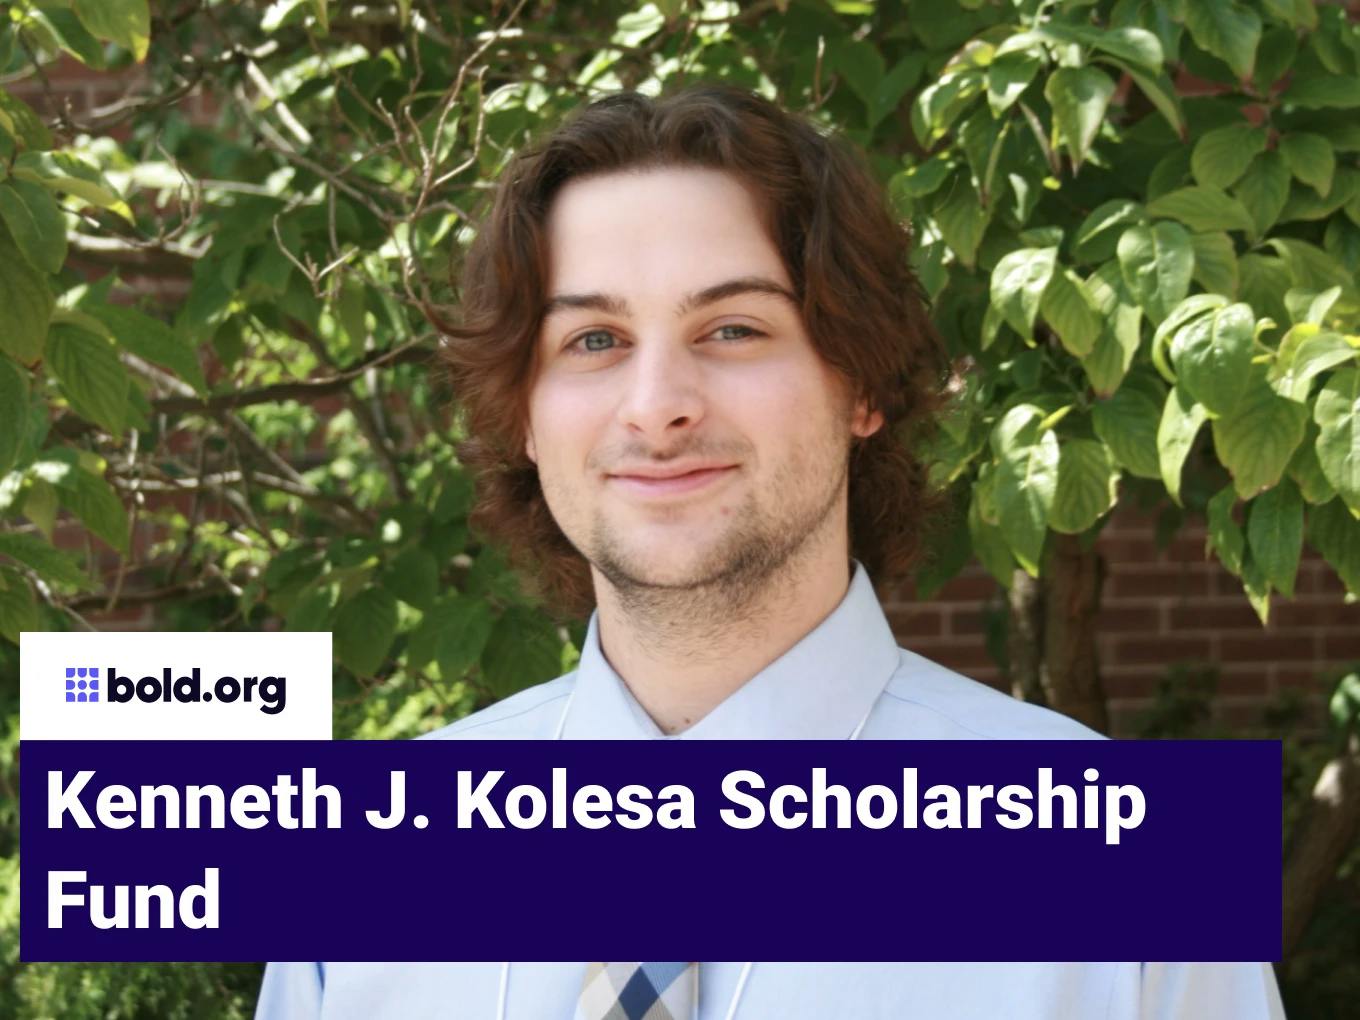 Kenneth J. Kolesa Scholarship Fund